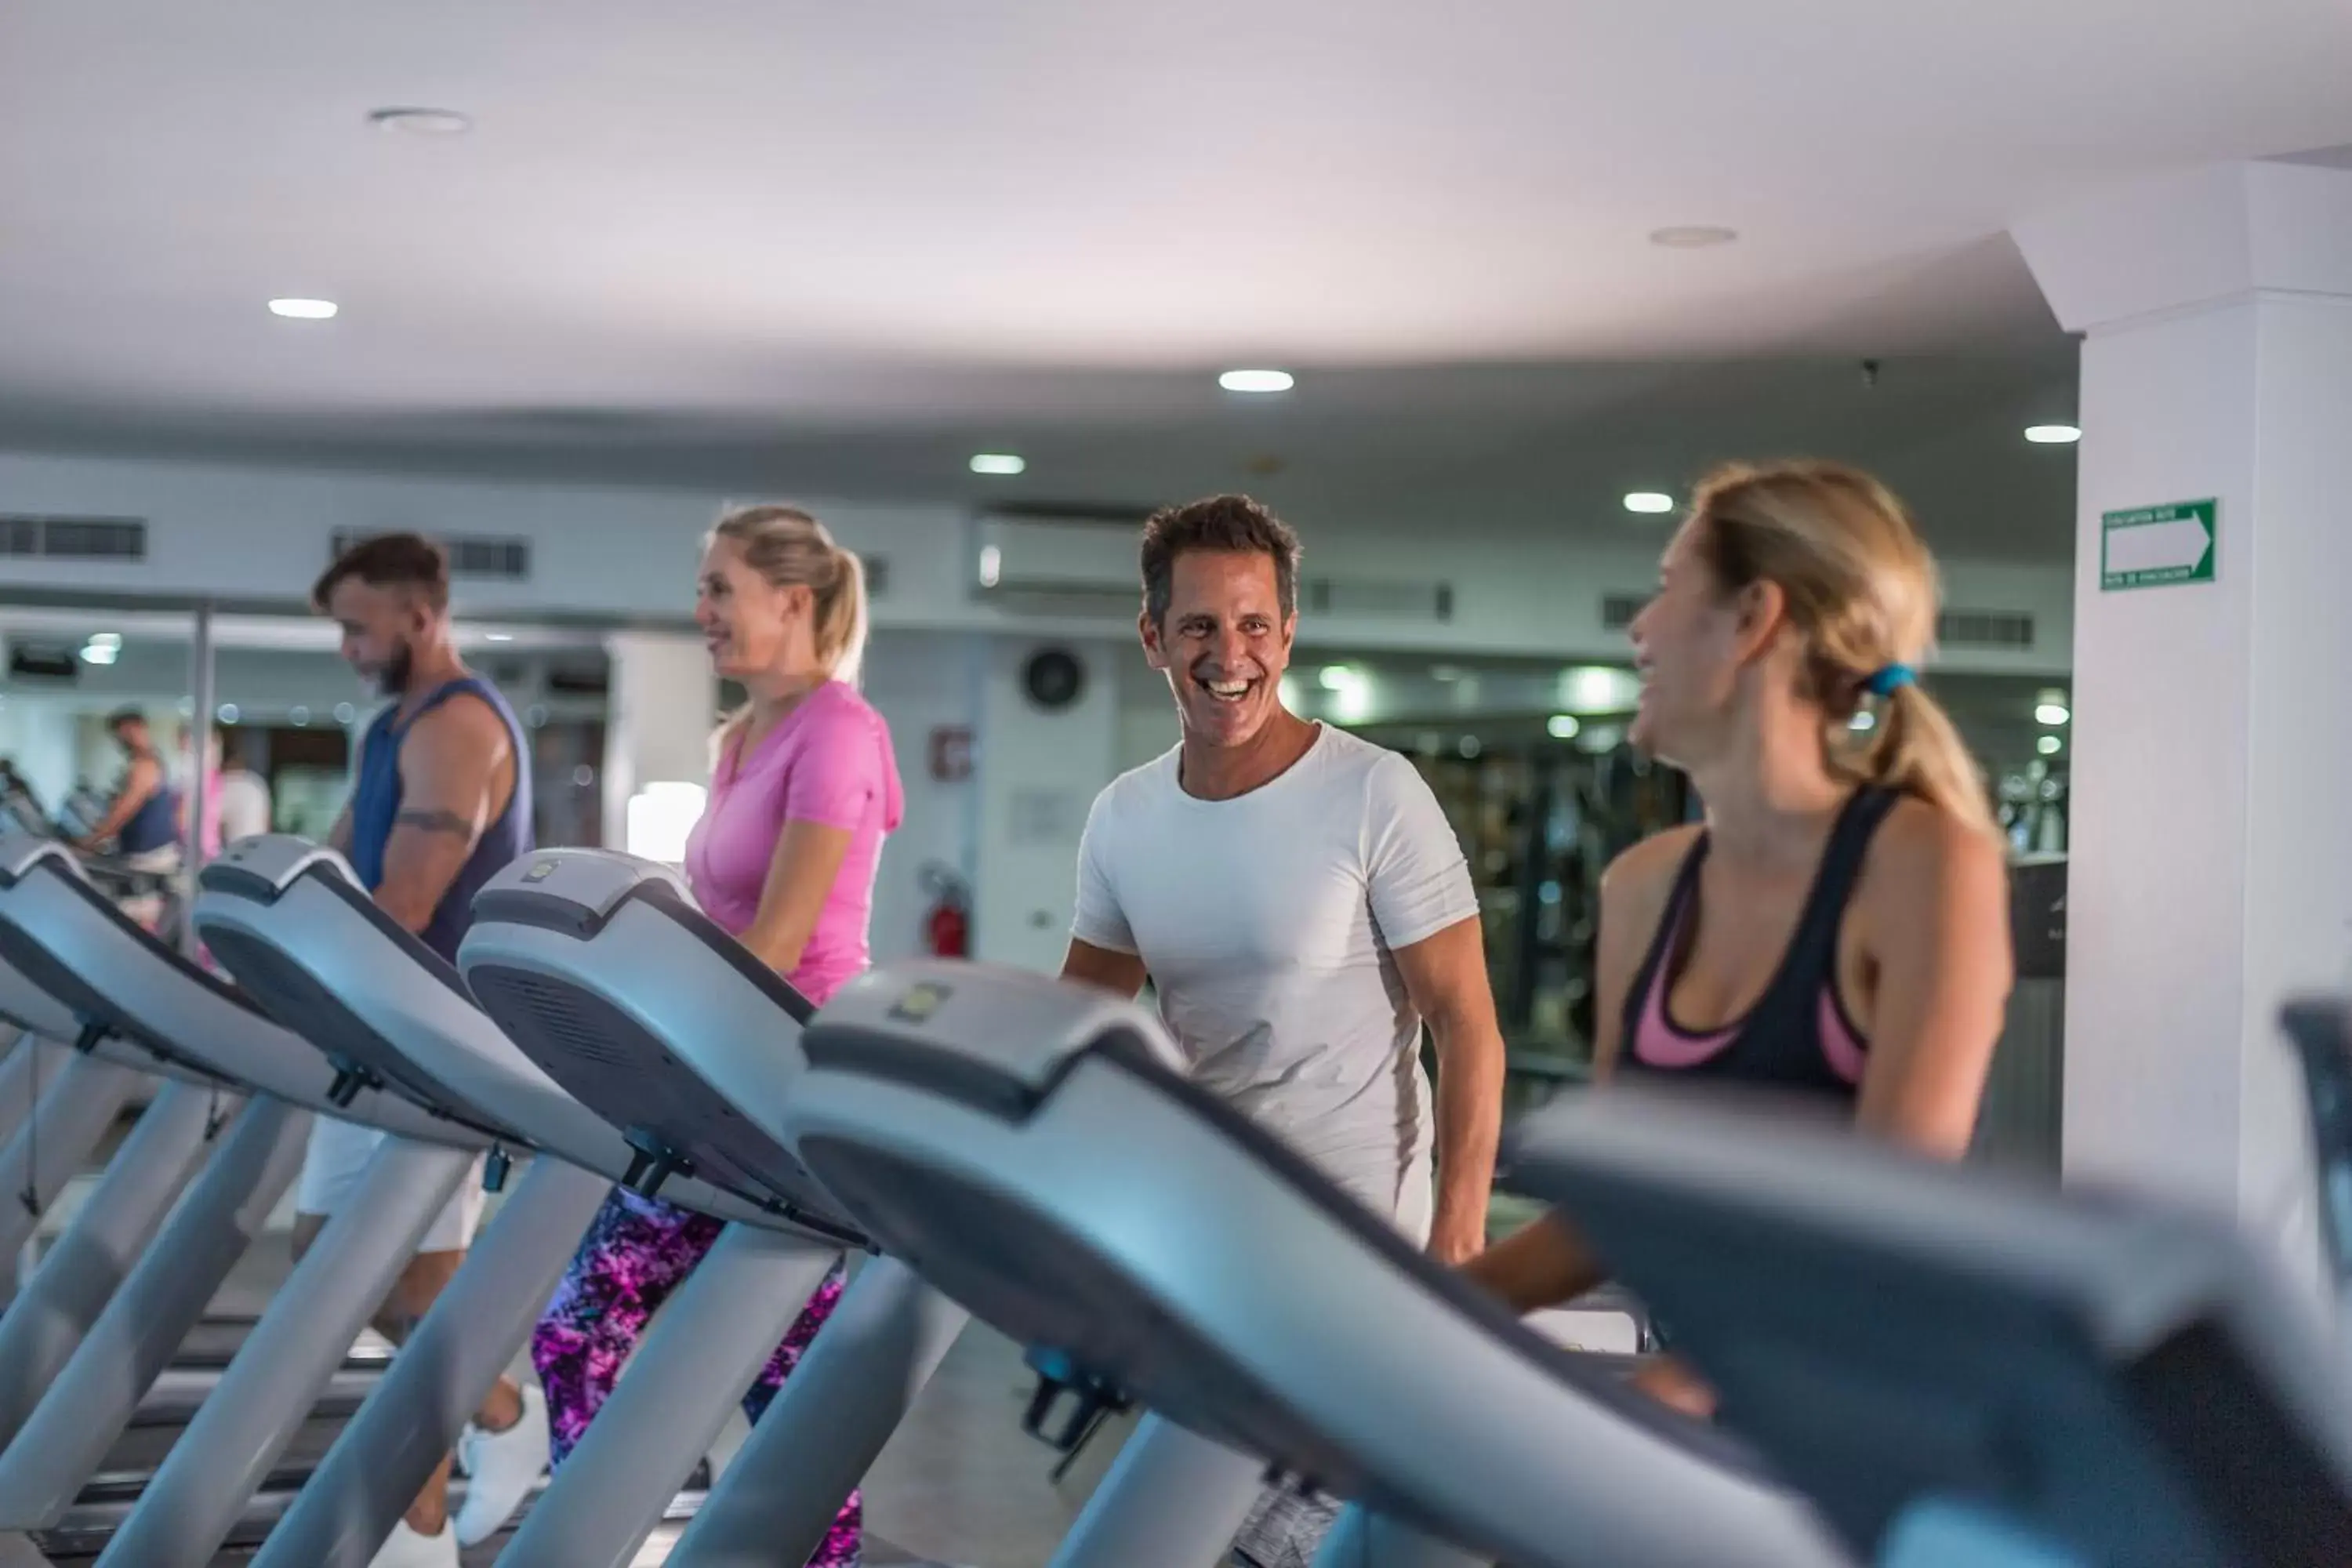 Fitness centre/facilities, Fitness Center/Facilities in Sandos Cancun All Inclusive